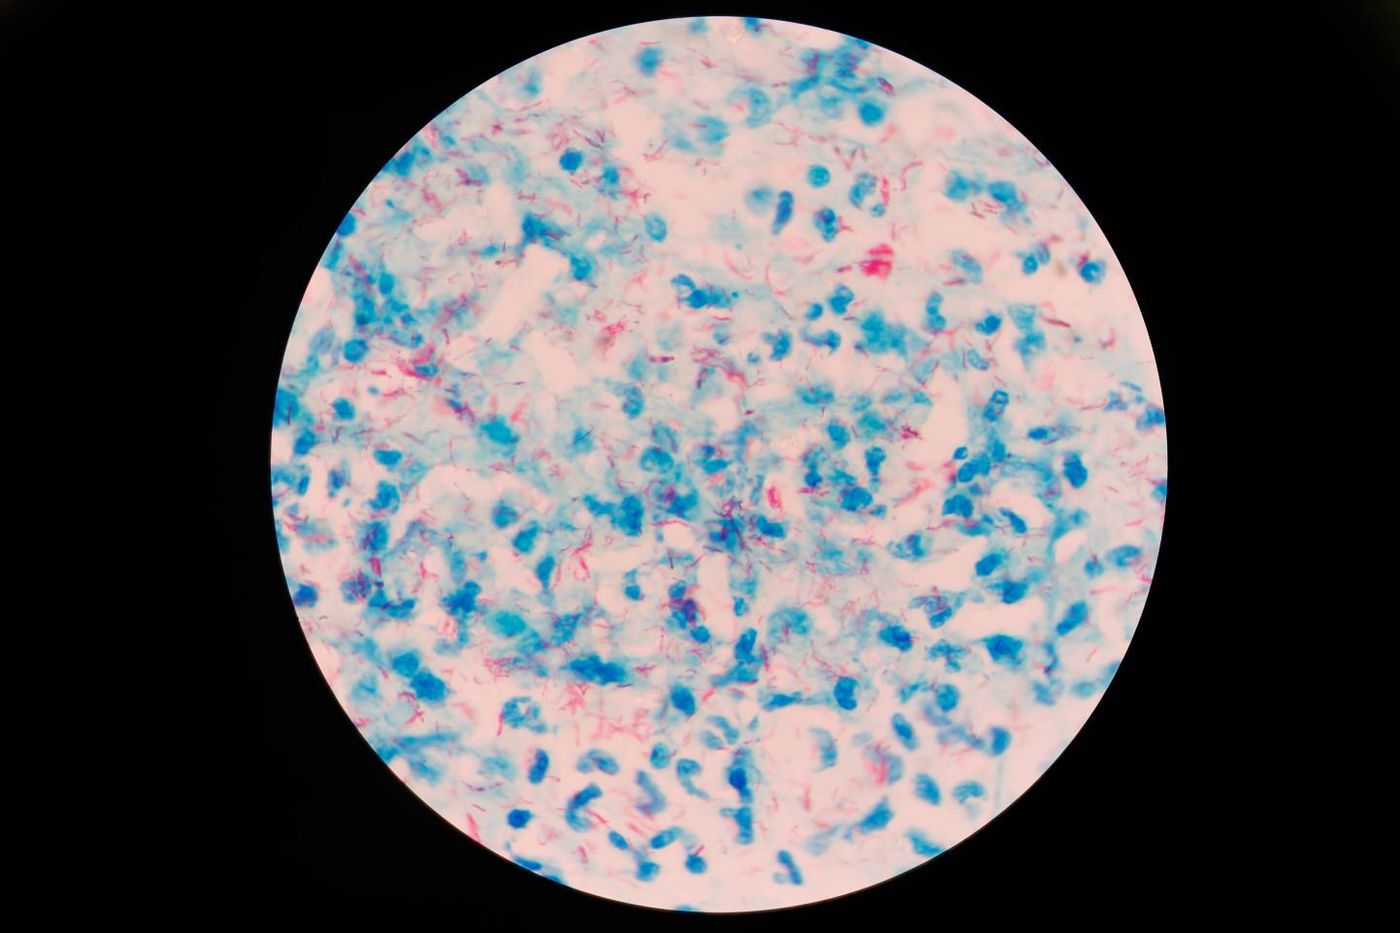 Mycobacterium tuberculosis (Mtb) under a microscope. / Credit: Texas Biomedical Research Institute